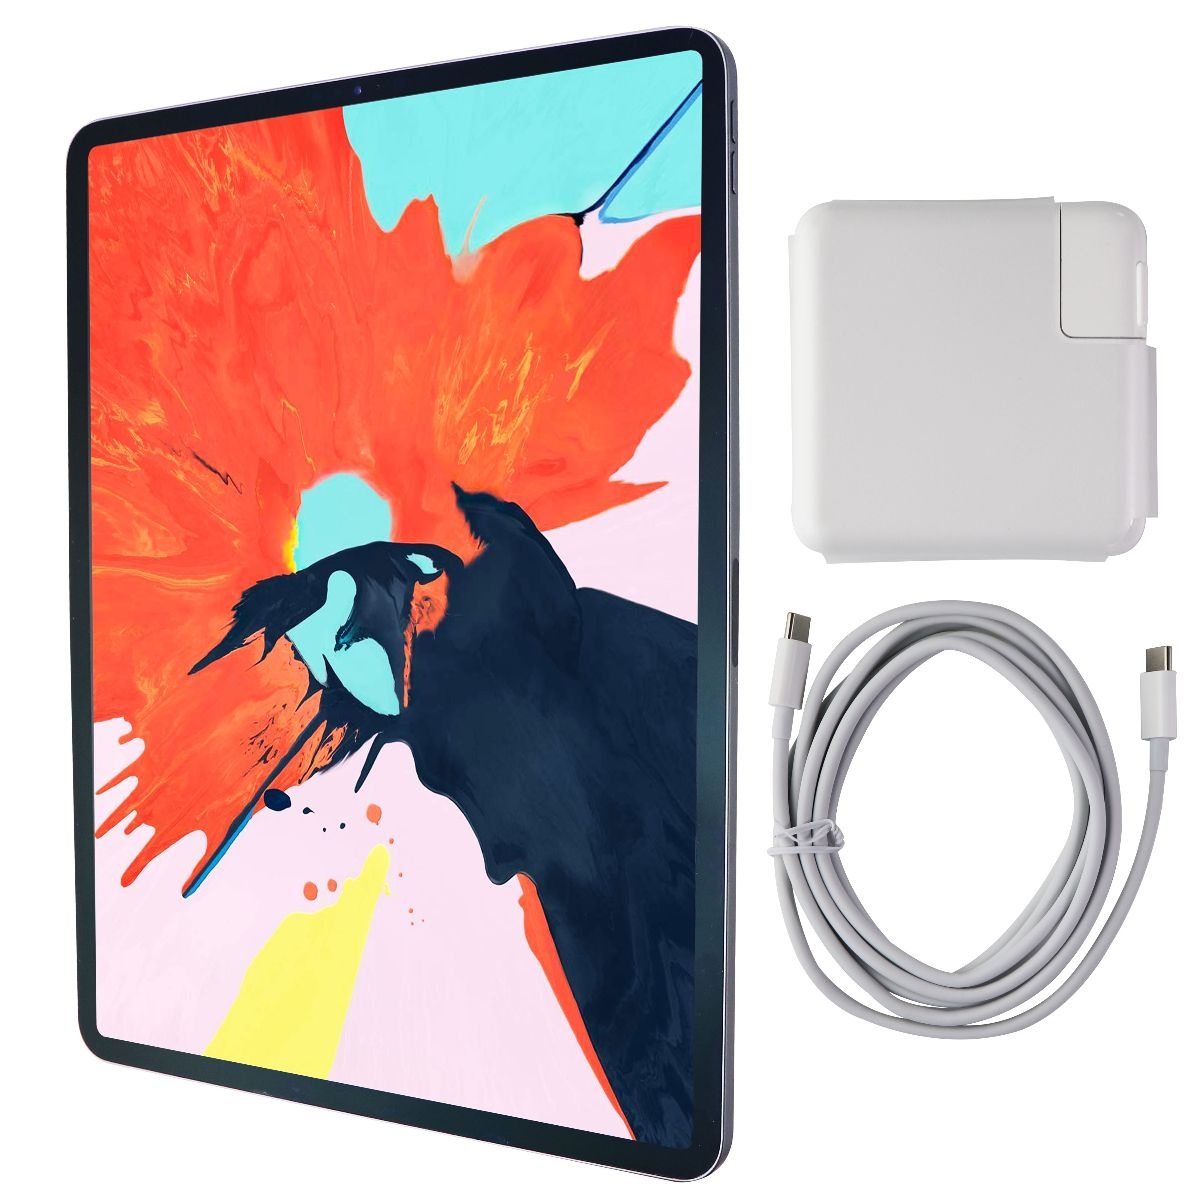 Apple iPad Pro 12.9-inch (3rd Gen) Tablet A1876 - 256GB ...